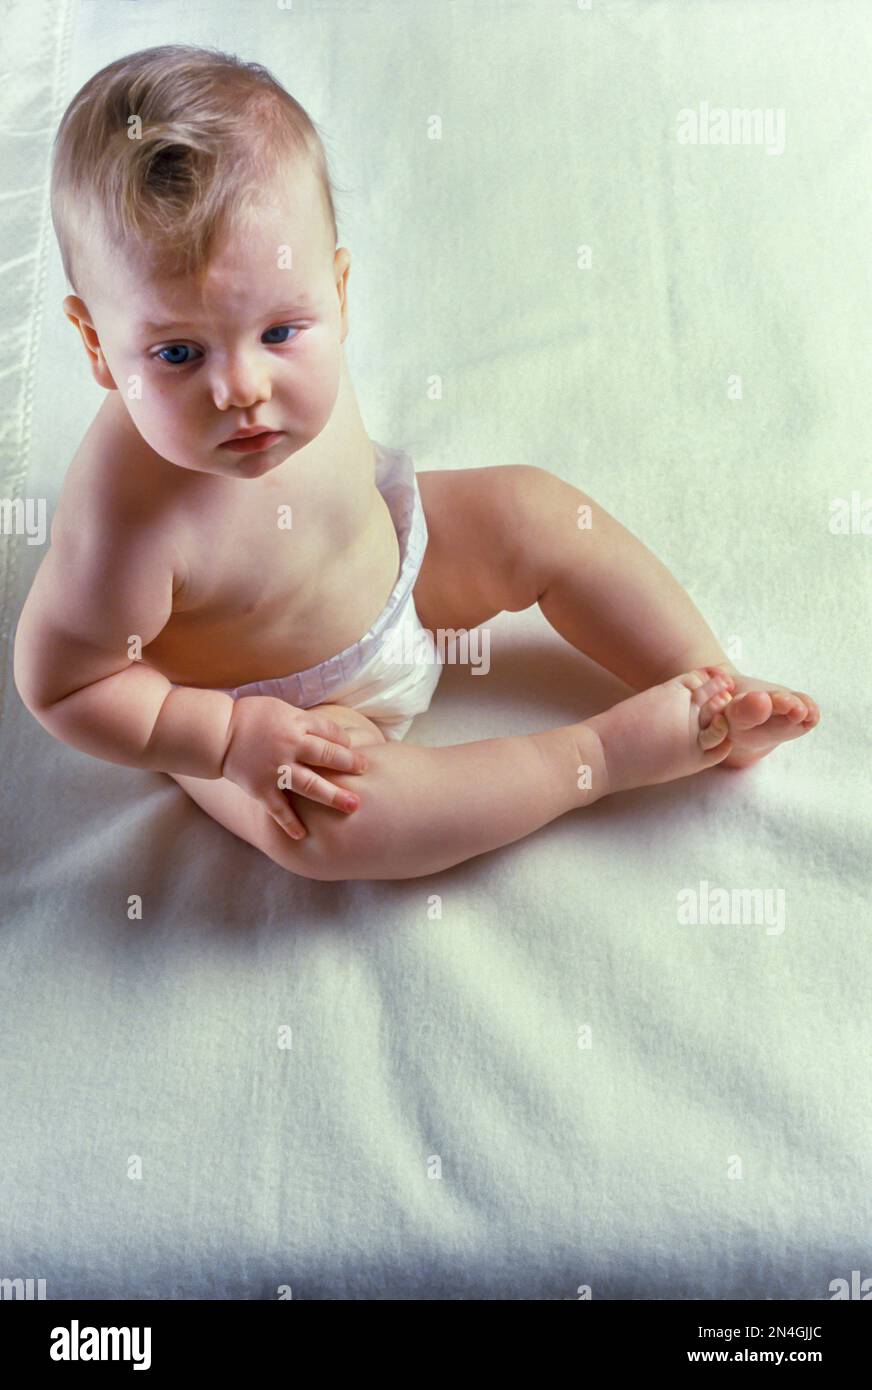 CAUCASIAN INFANT BABY SITTING UPRIGHT ON WHITE BLANKET Stock Photo